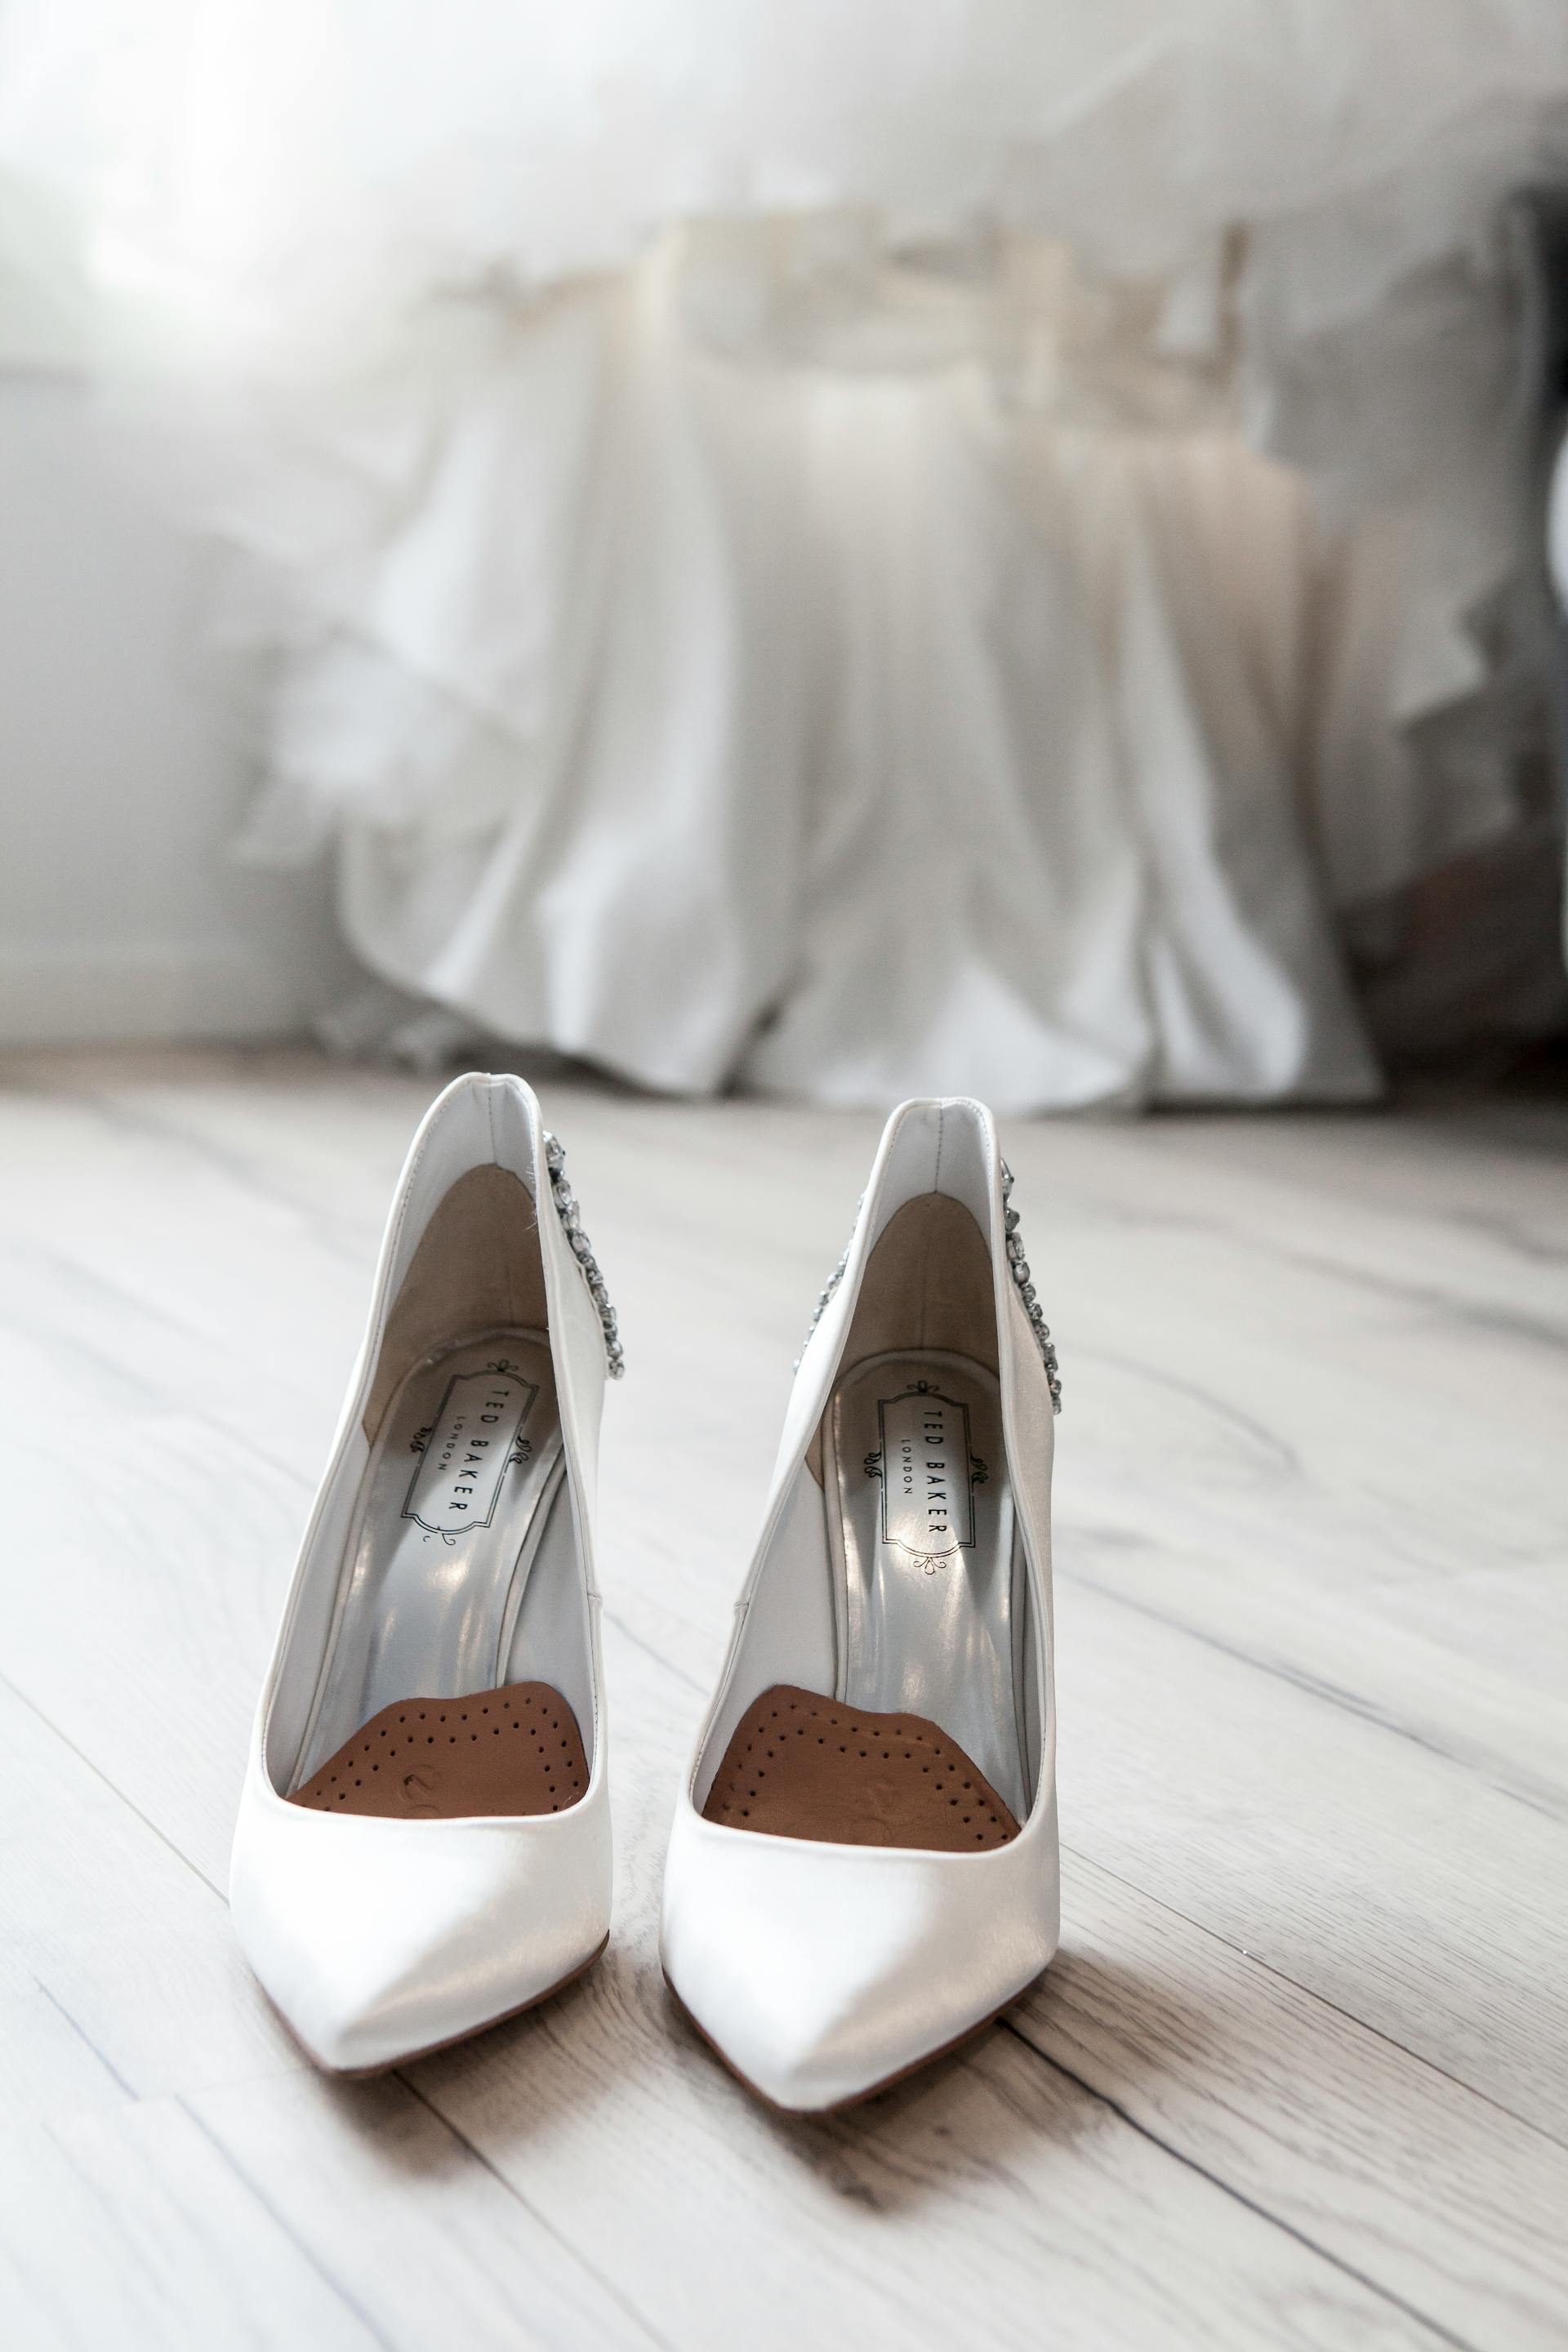 White bridal shoes | Source: Pexels